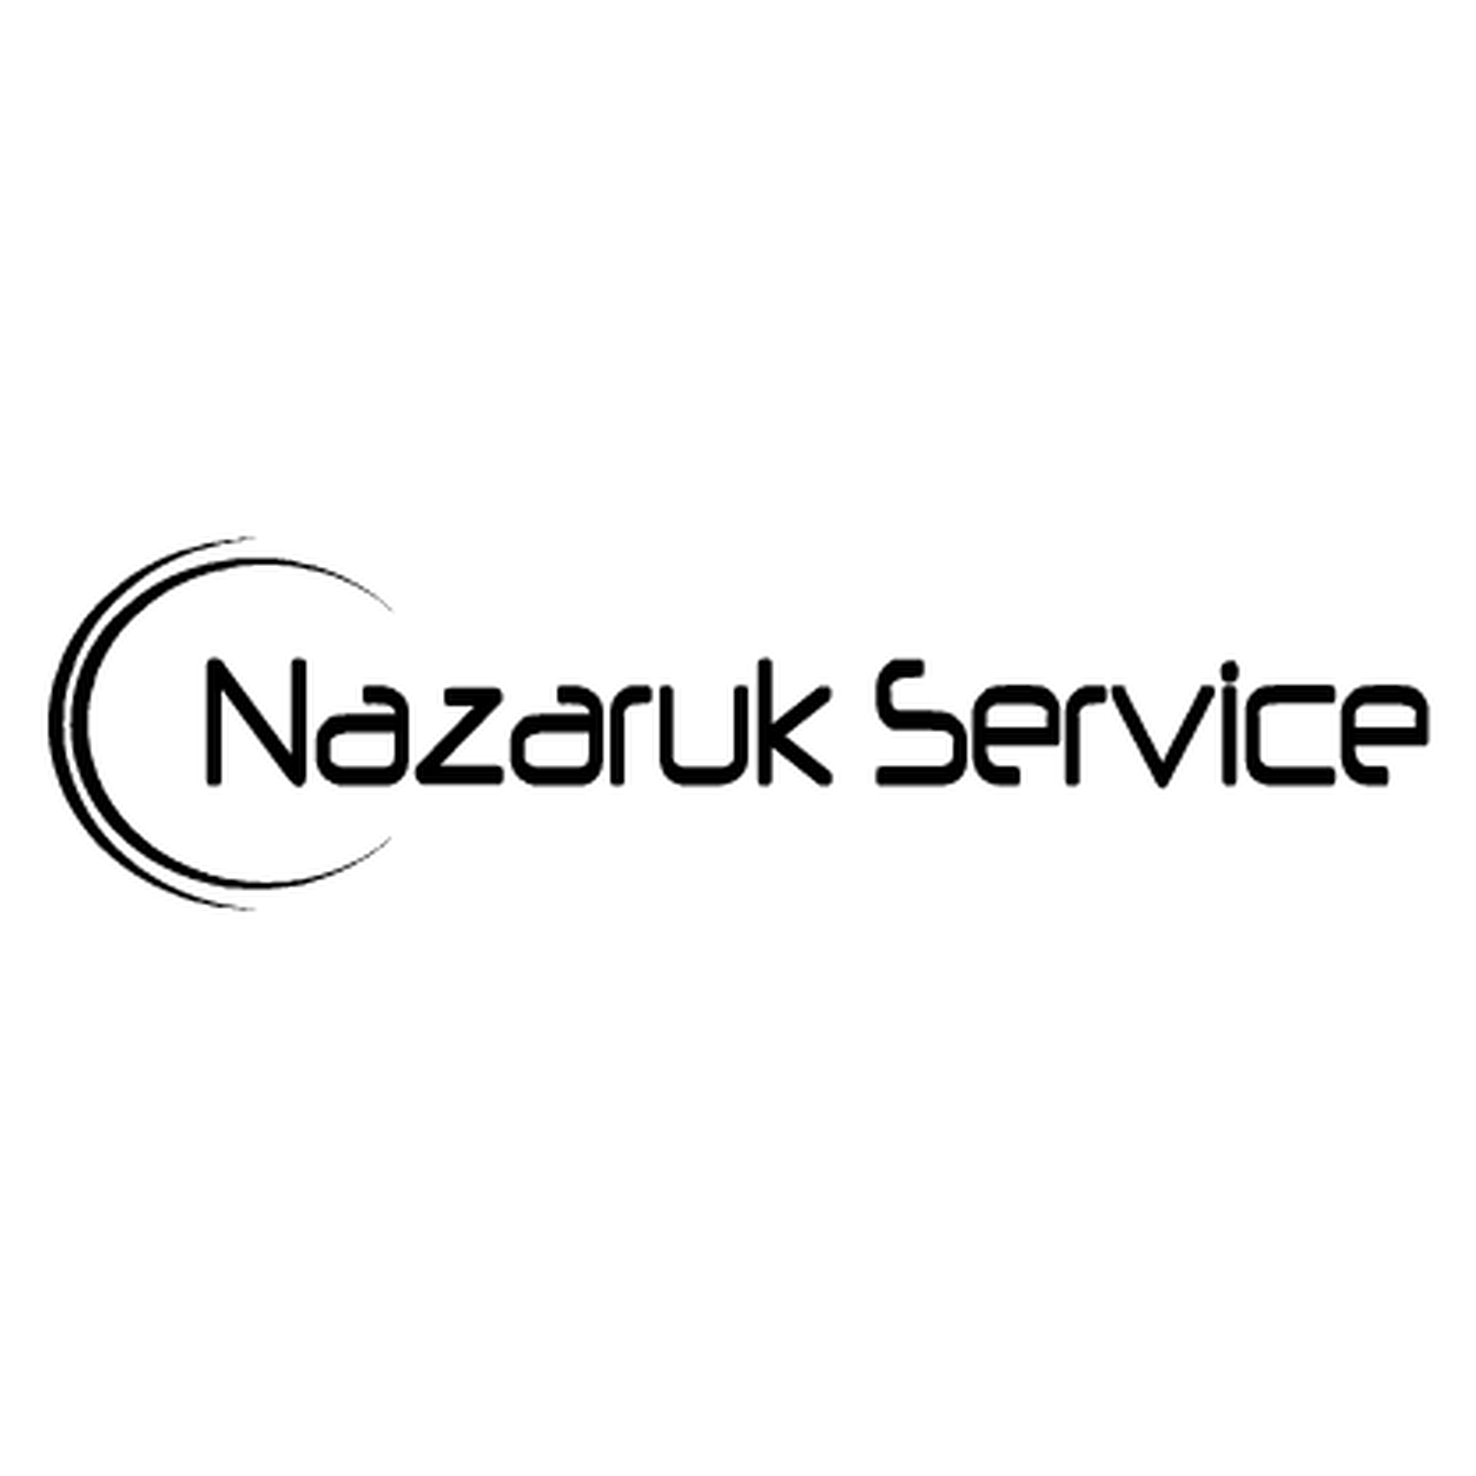 Nazaruk Service